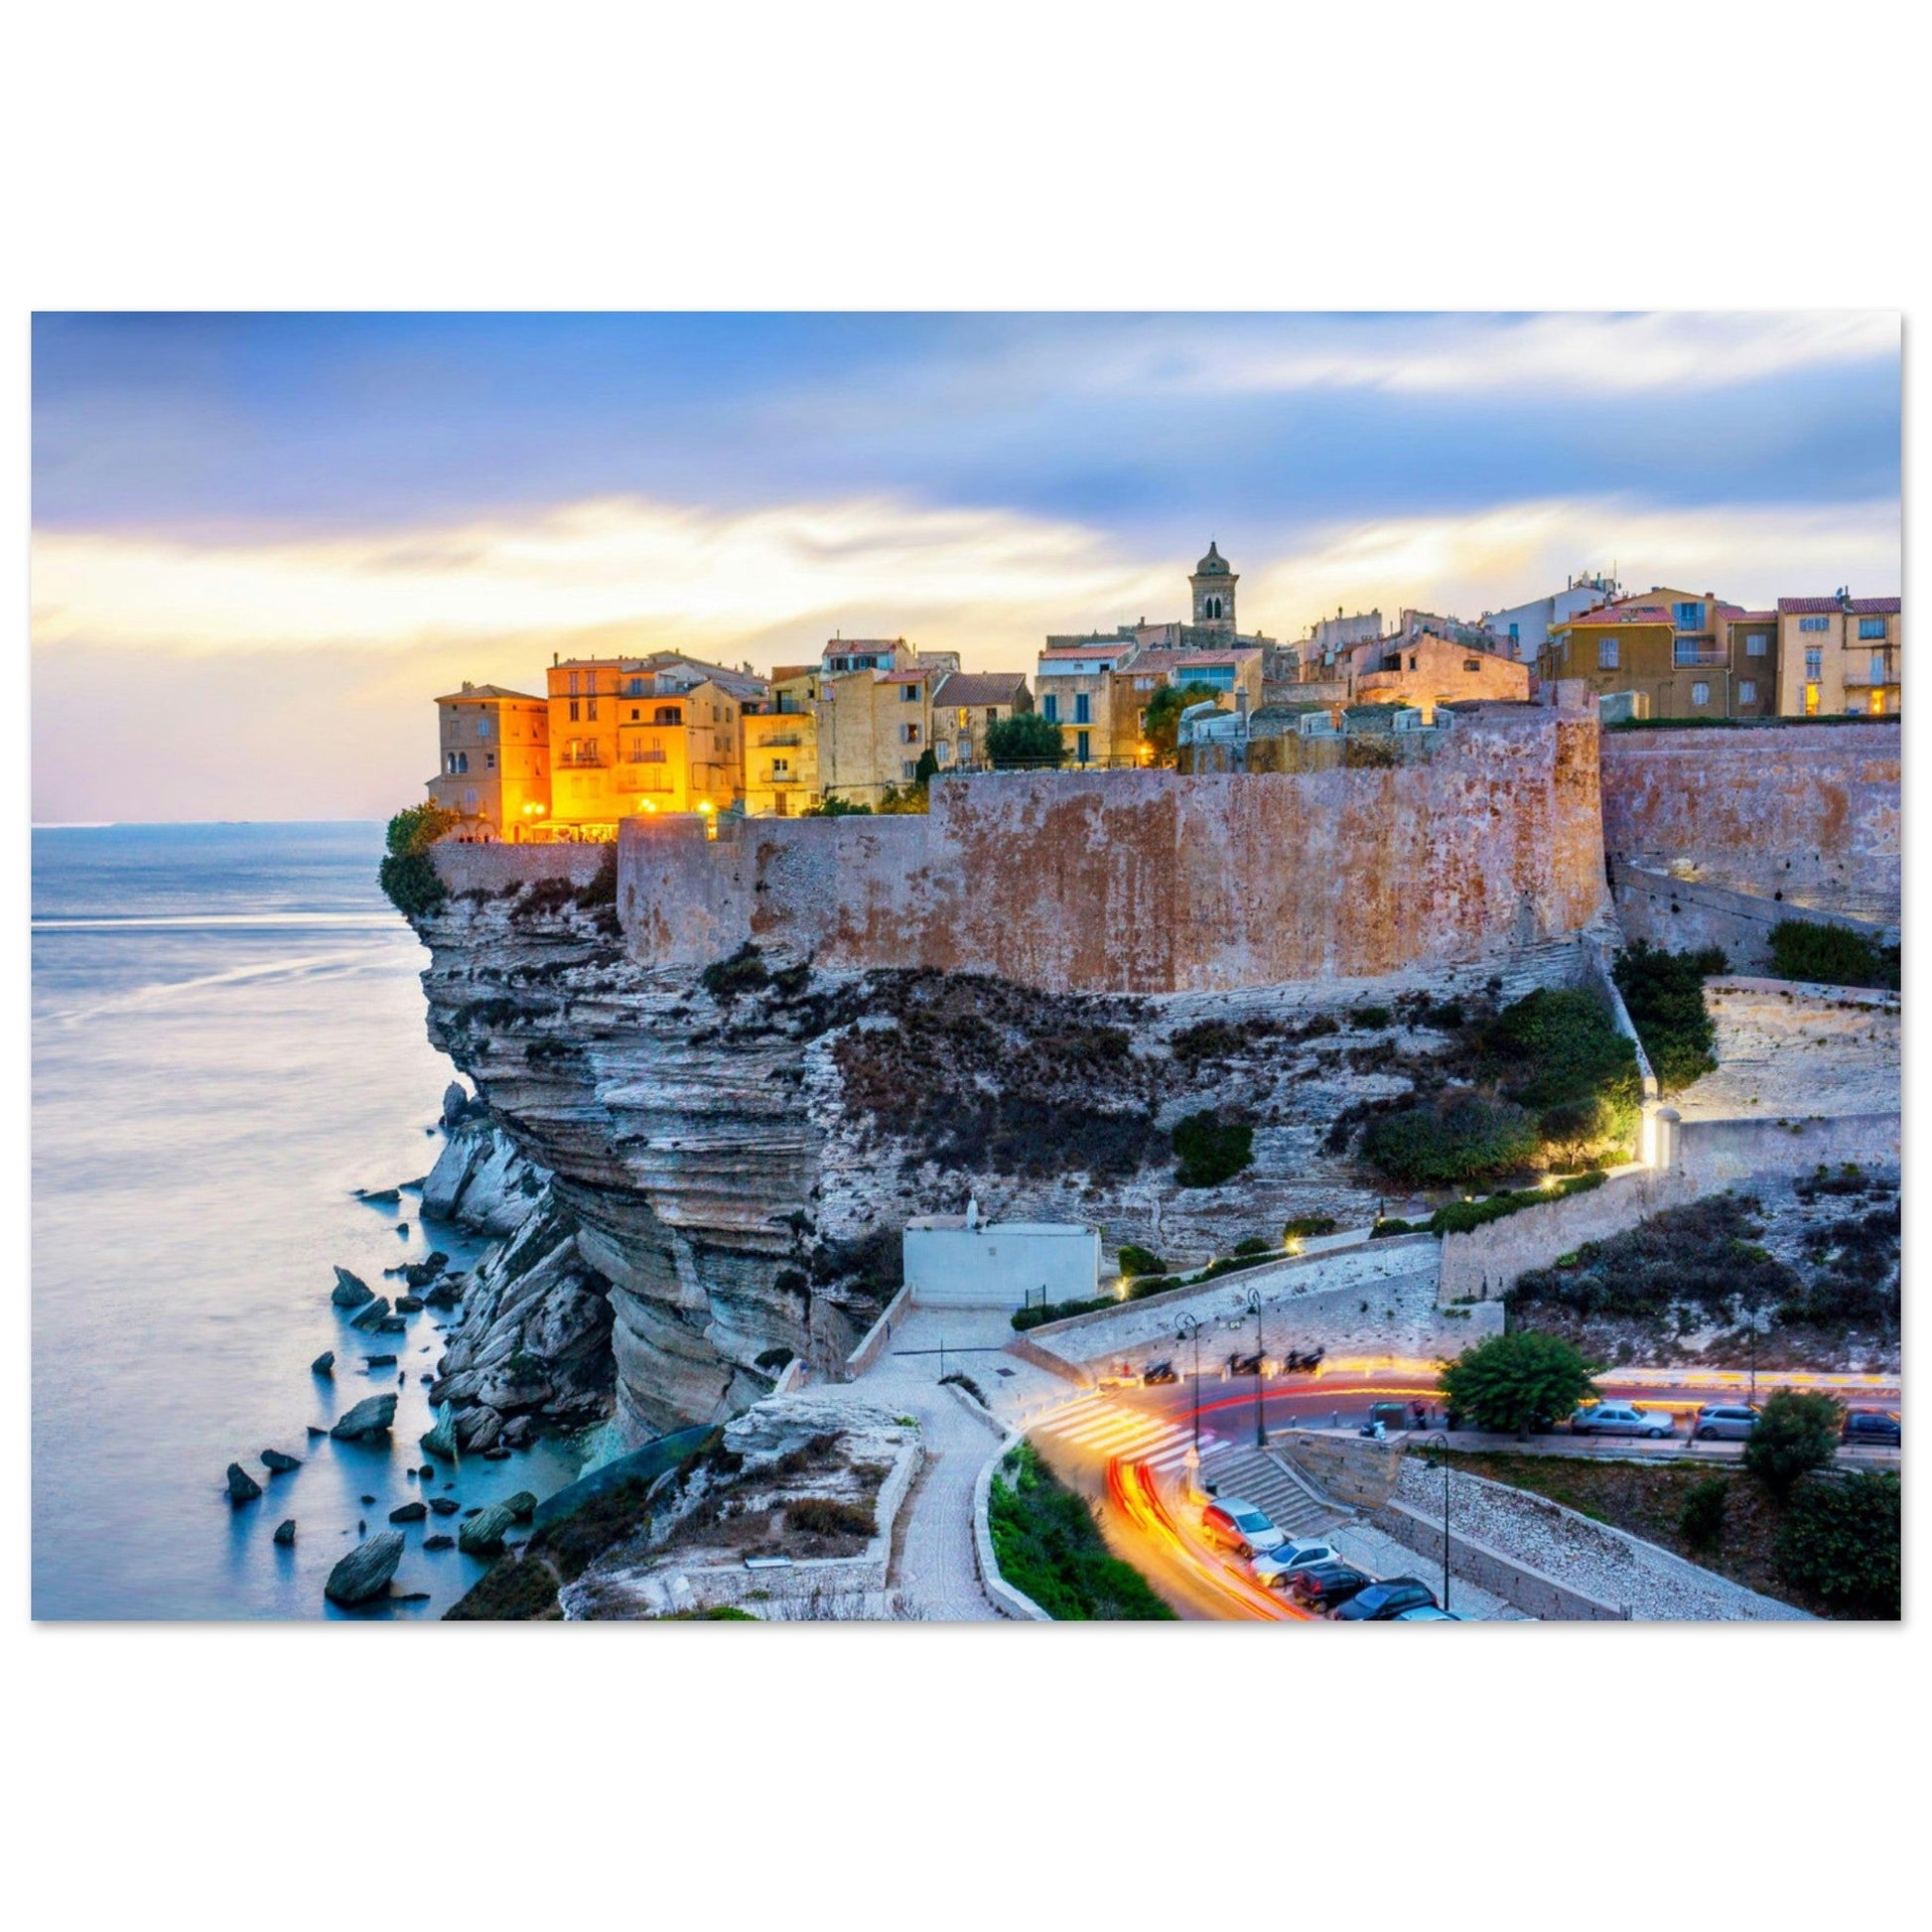 Vente Photo de Bonifacio, Corse #1 - Tableau photo paysage